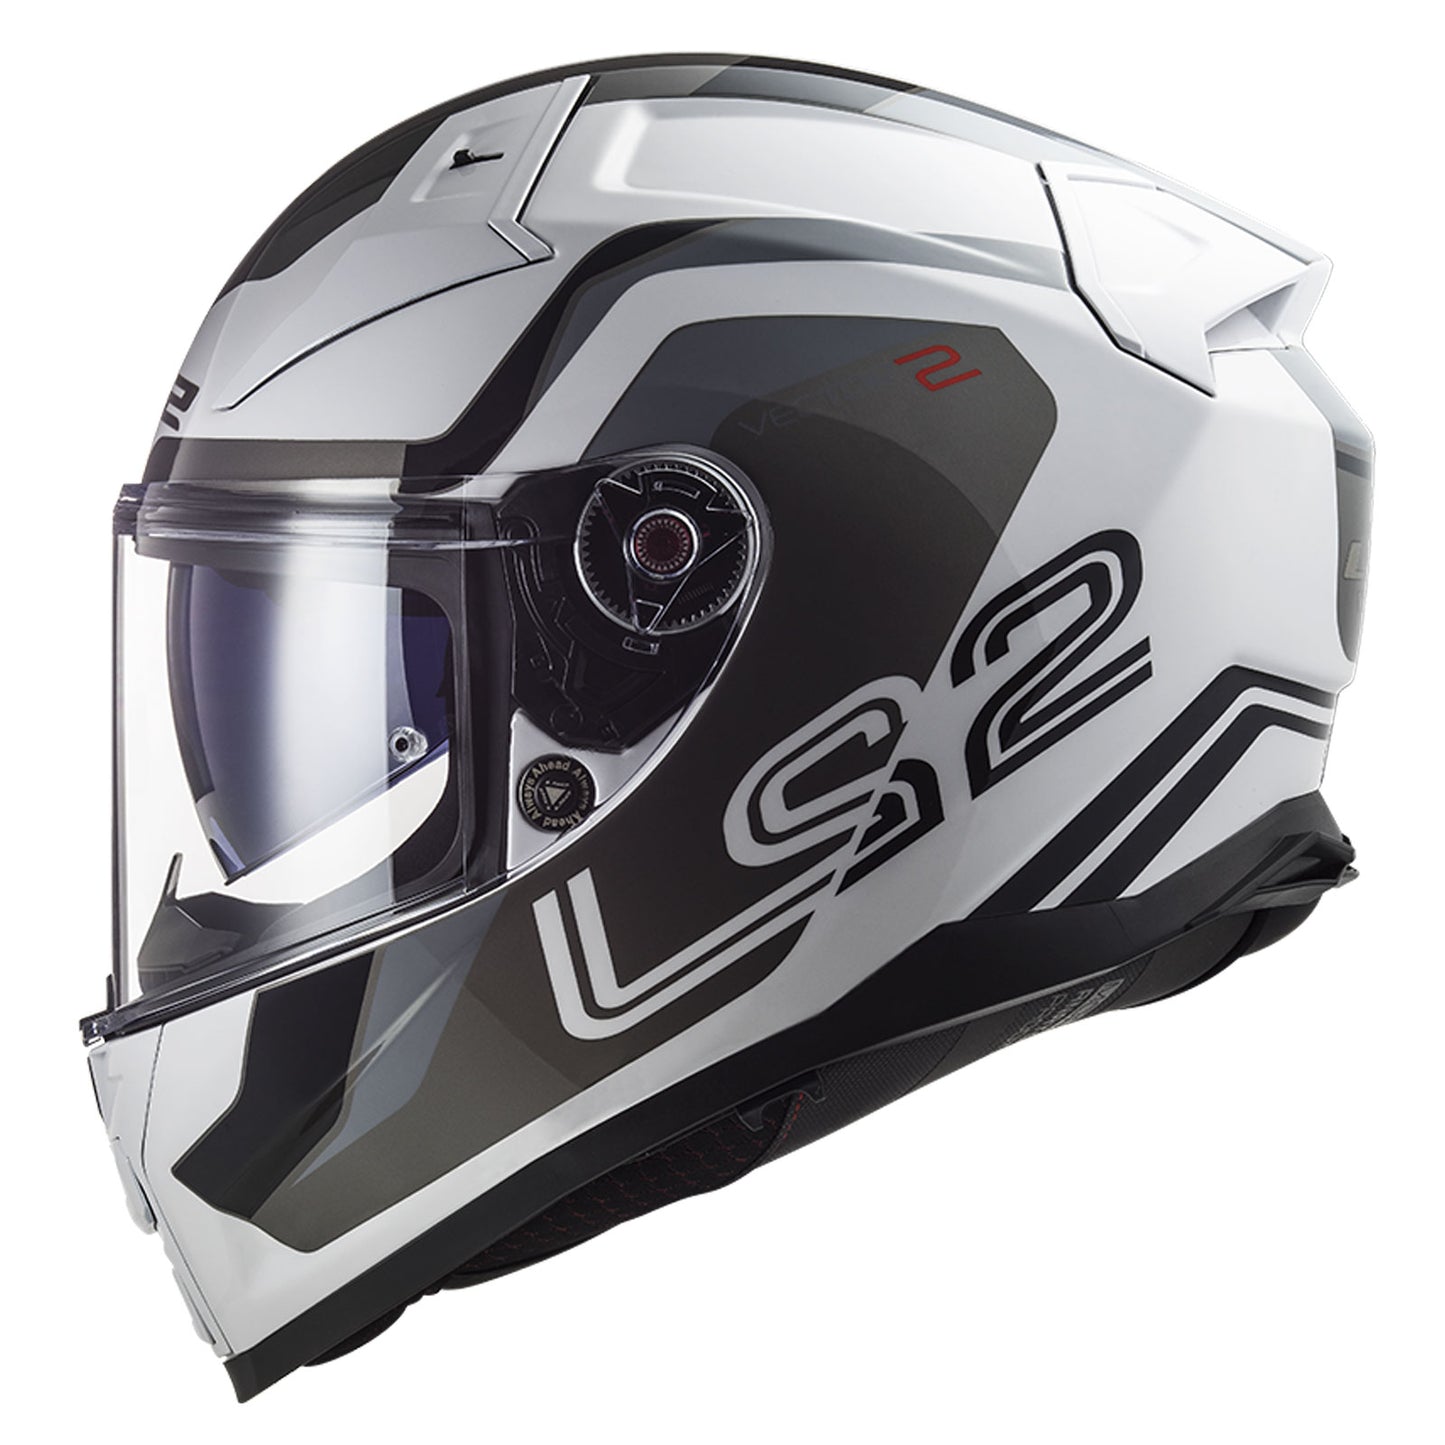 Riderwear | LS2 FF811 VECTOR-II Fibreglass Helmet - METRIC White Silver